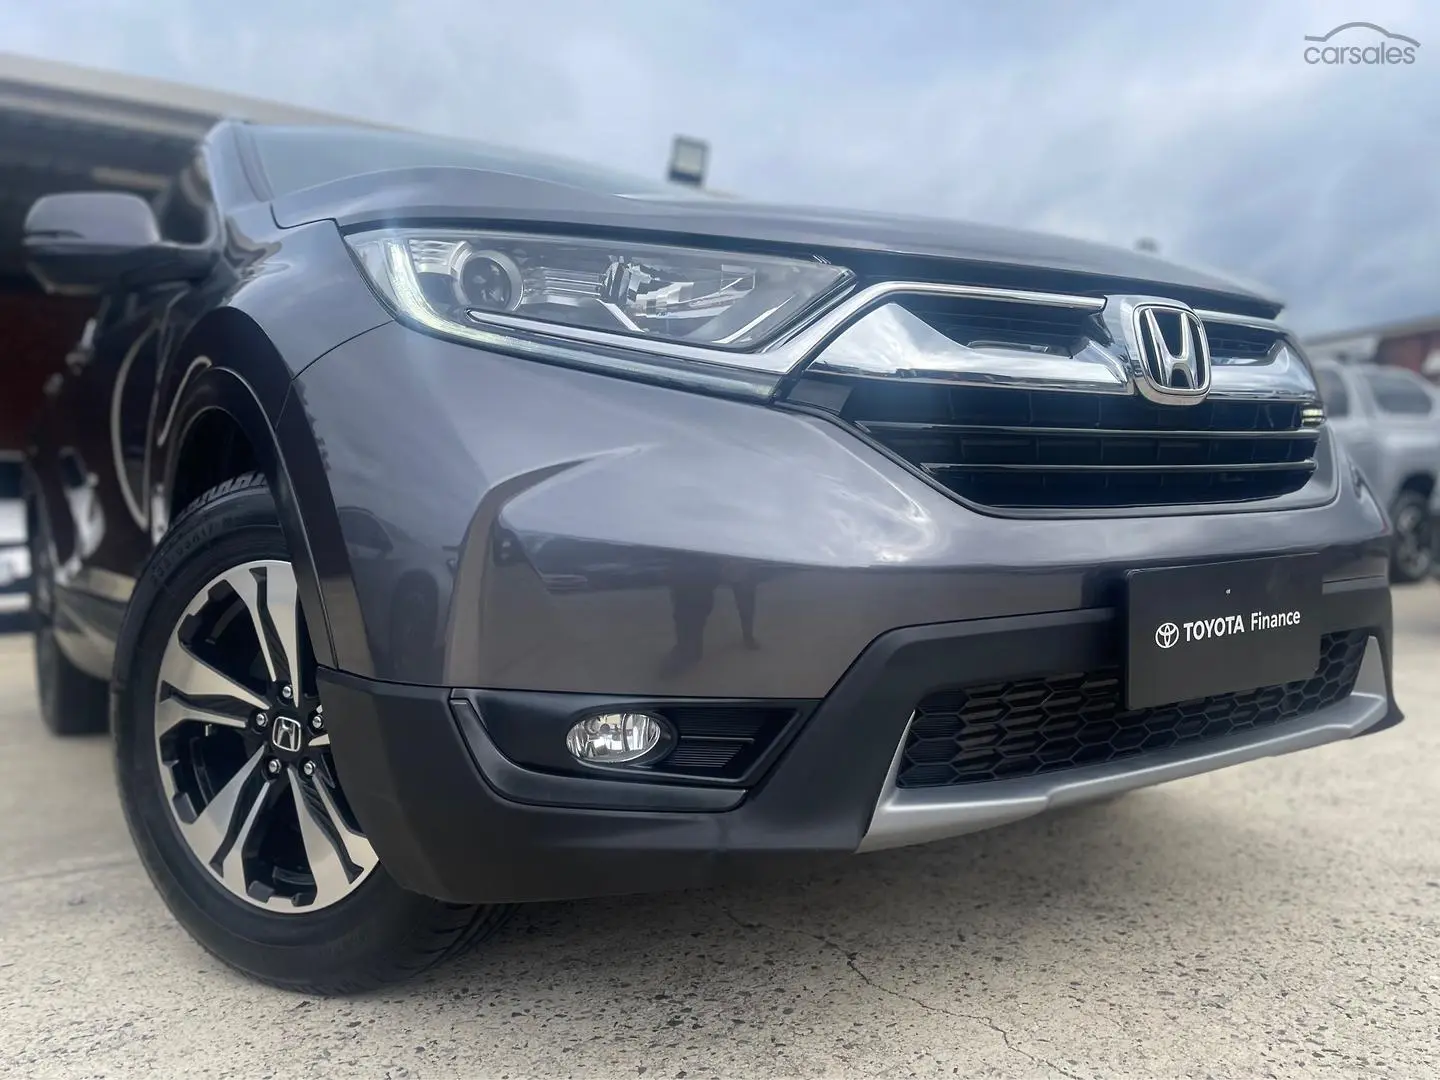 2018 Honda CR-V Image 3